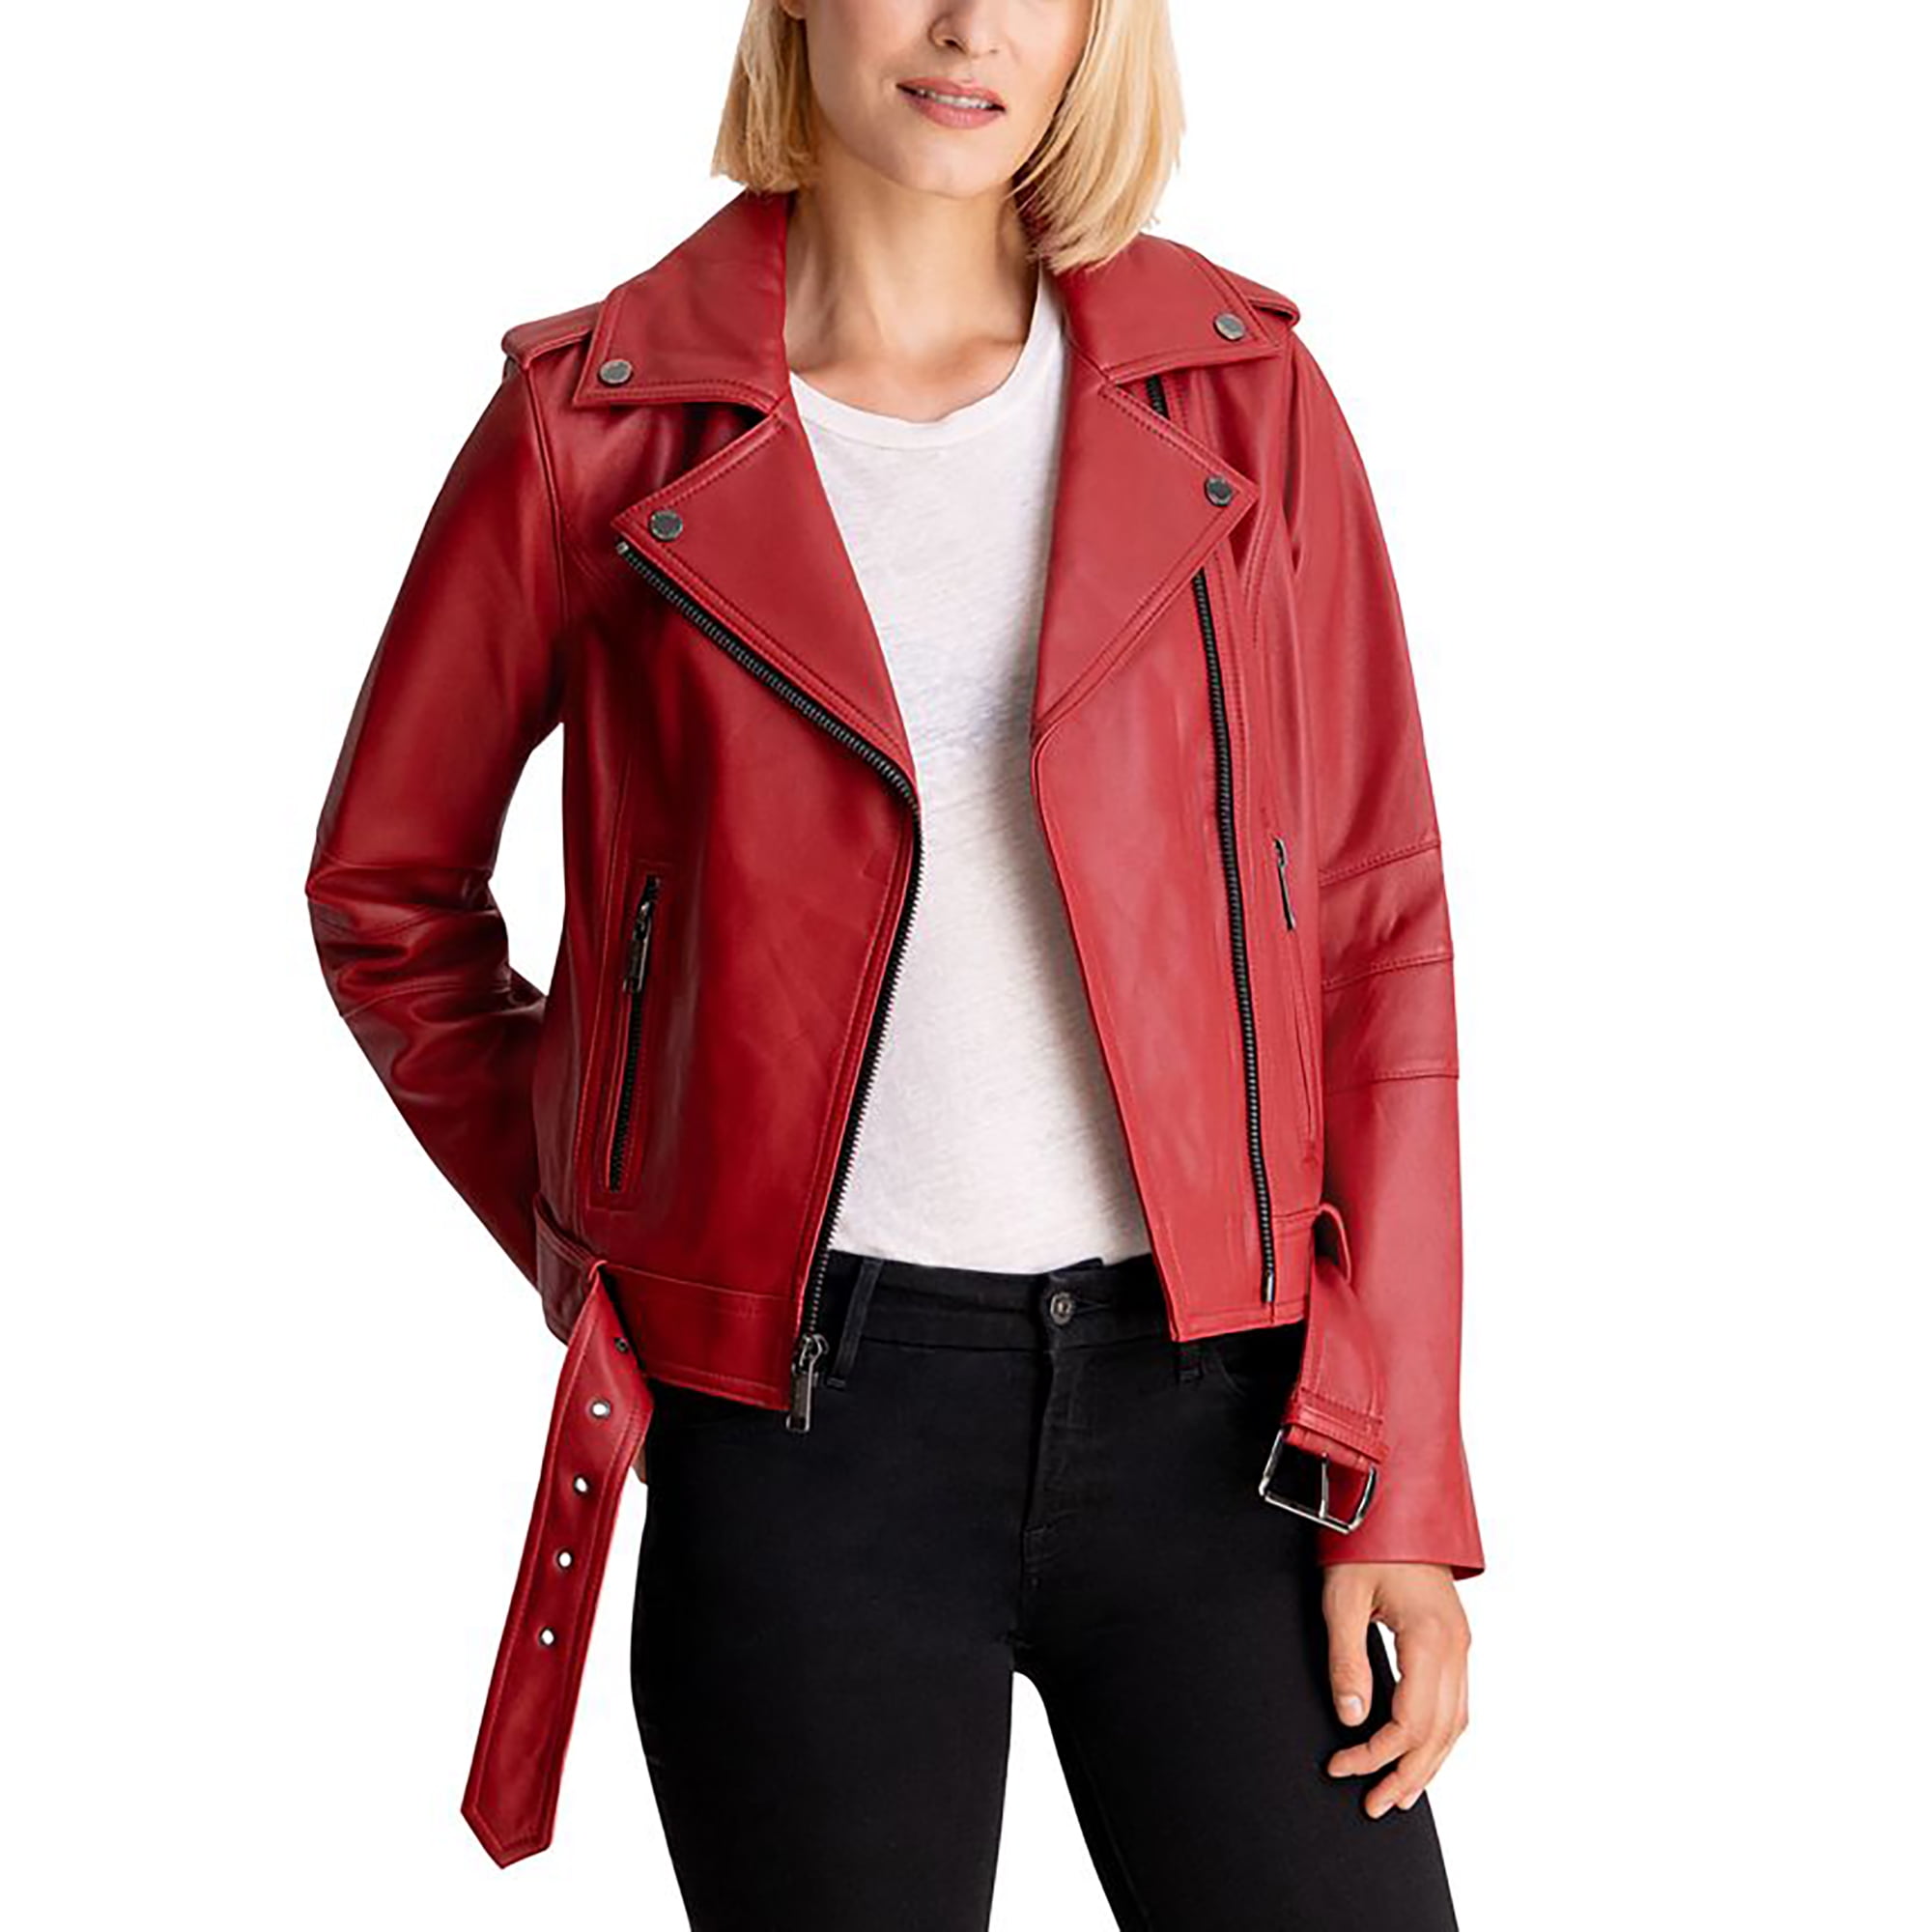 Michael Kors Women Red Jacket - Lambskin Leather Jackets for Women - Comfortable & Long Sleeves Women Moto Jacket With 2 Sides Zip Pockets, Shoulder Epaulettes - Full Zipper Closure Jacket - Walmart.com